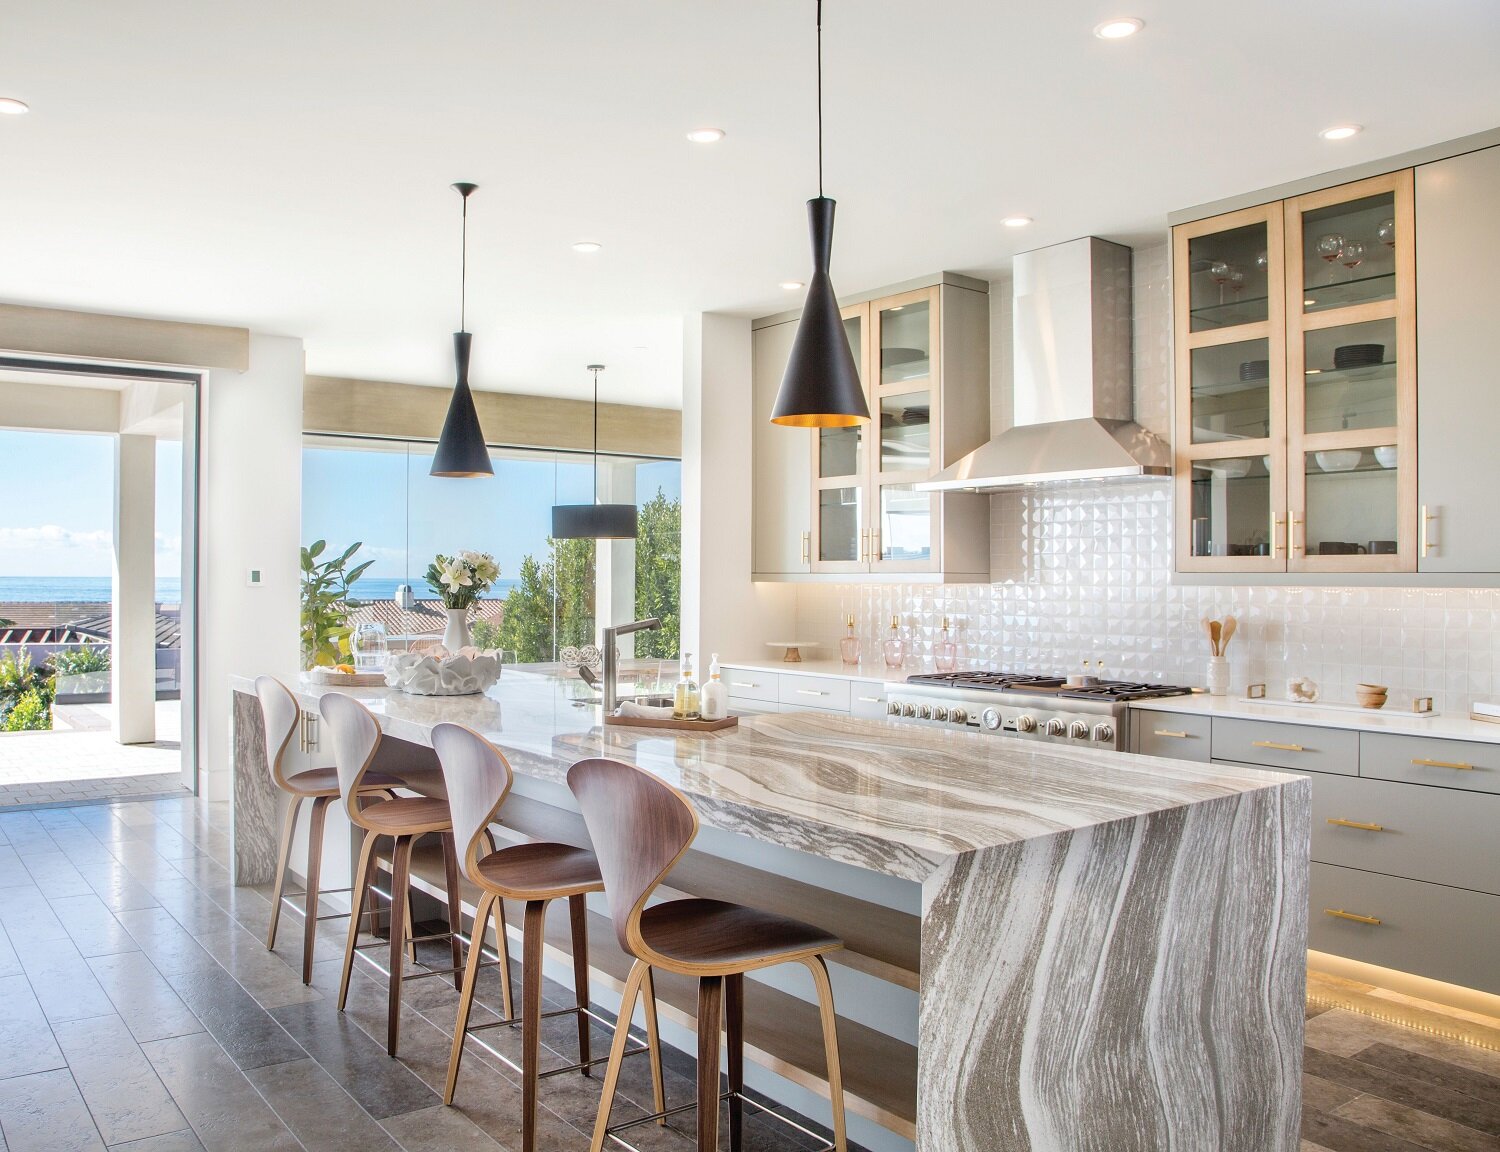 Kitchen backsplash creates waves – Orlando Sentinel